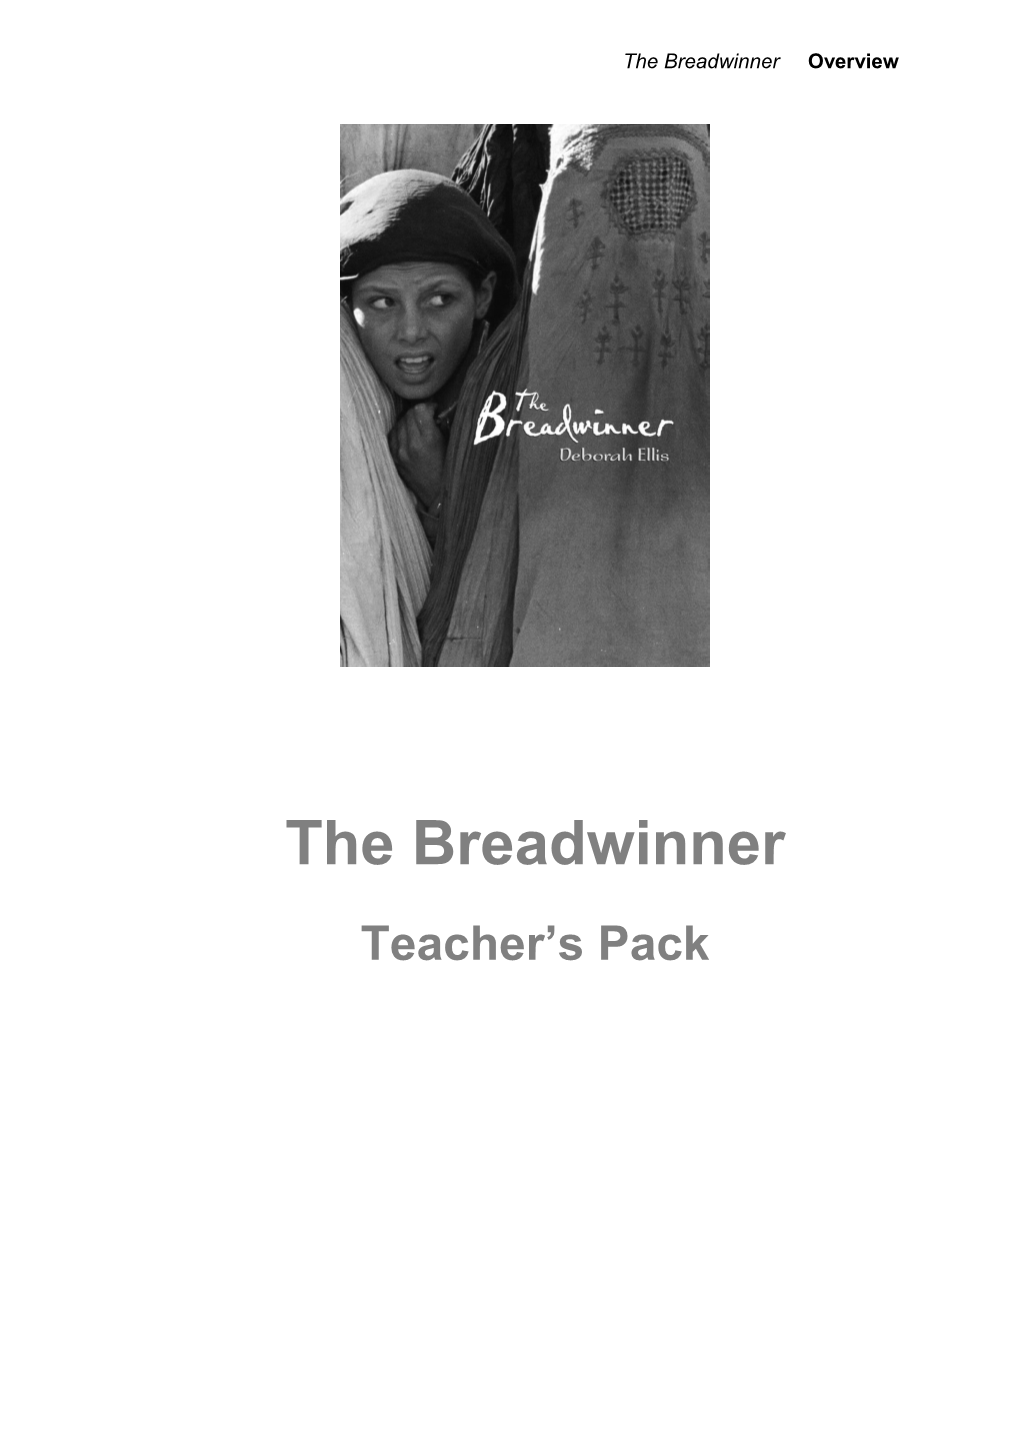 The Breadwinner Overview